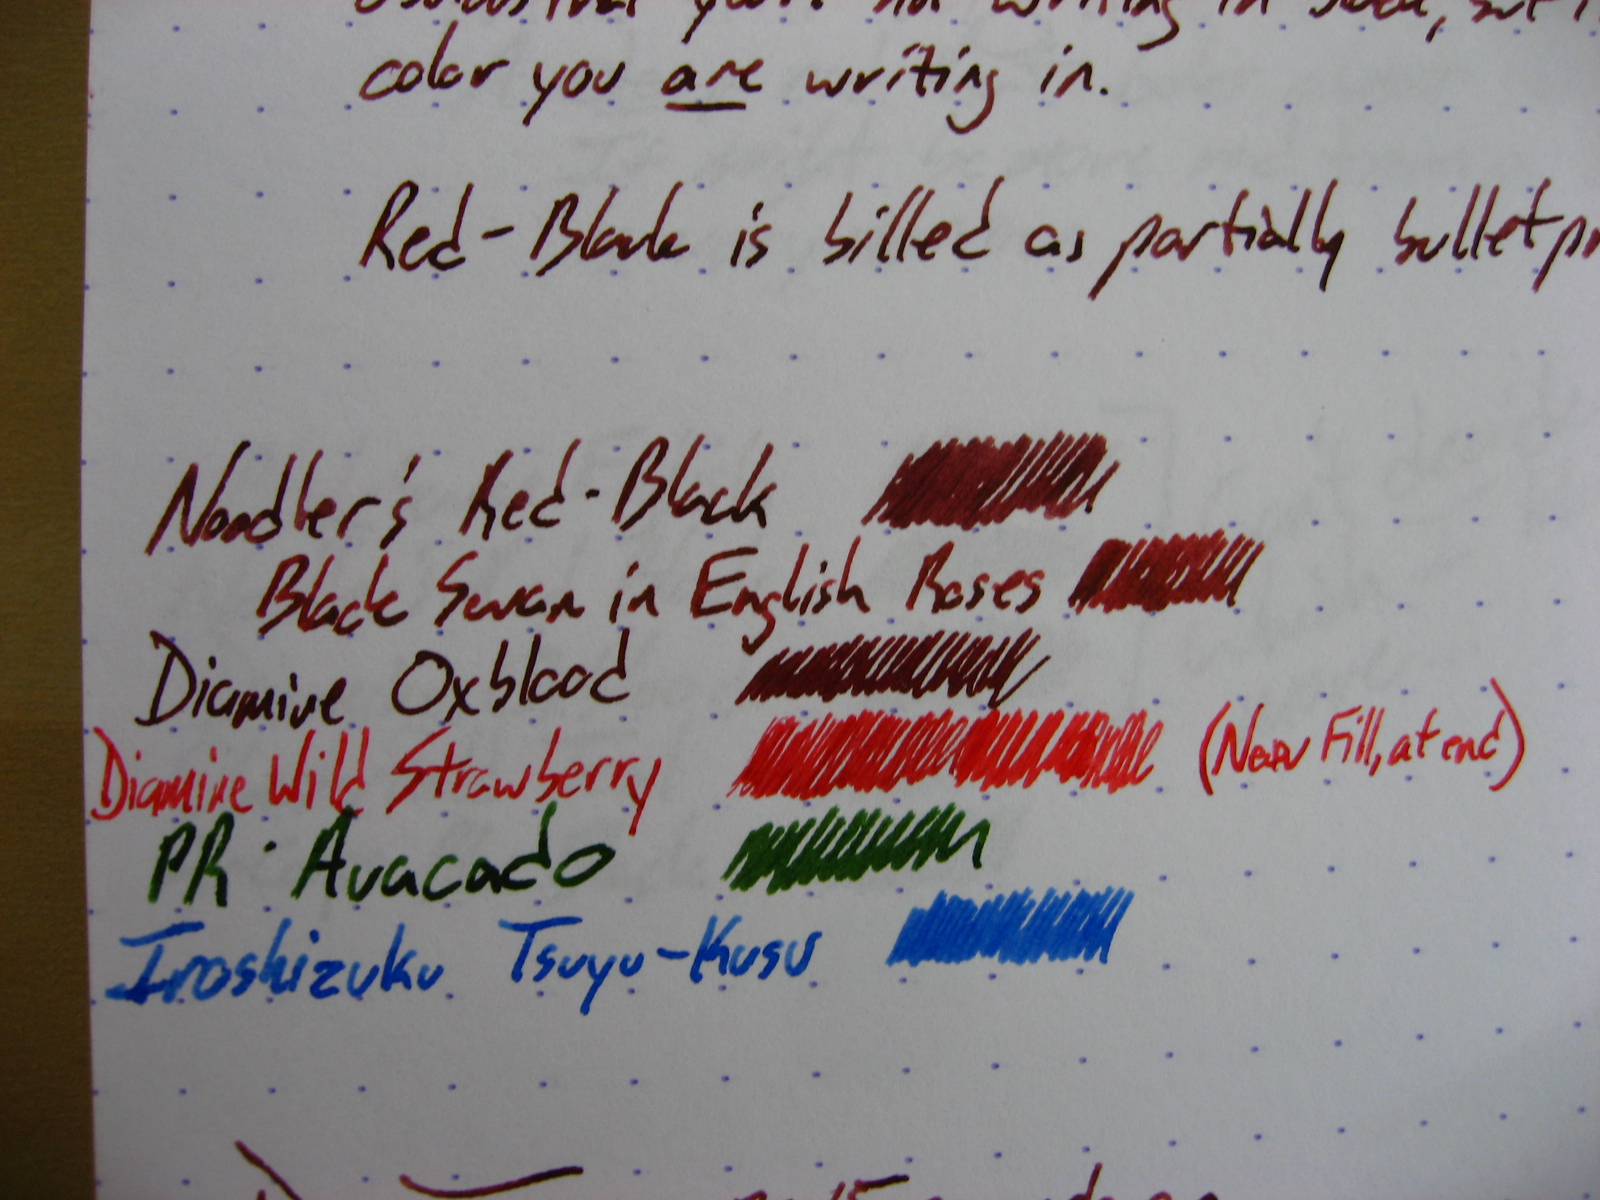 NOODLERS INK RED ~ a standard red ink color stock # 19002